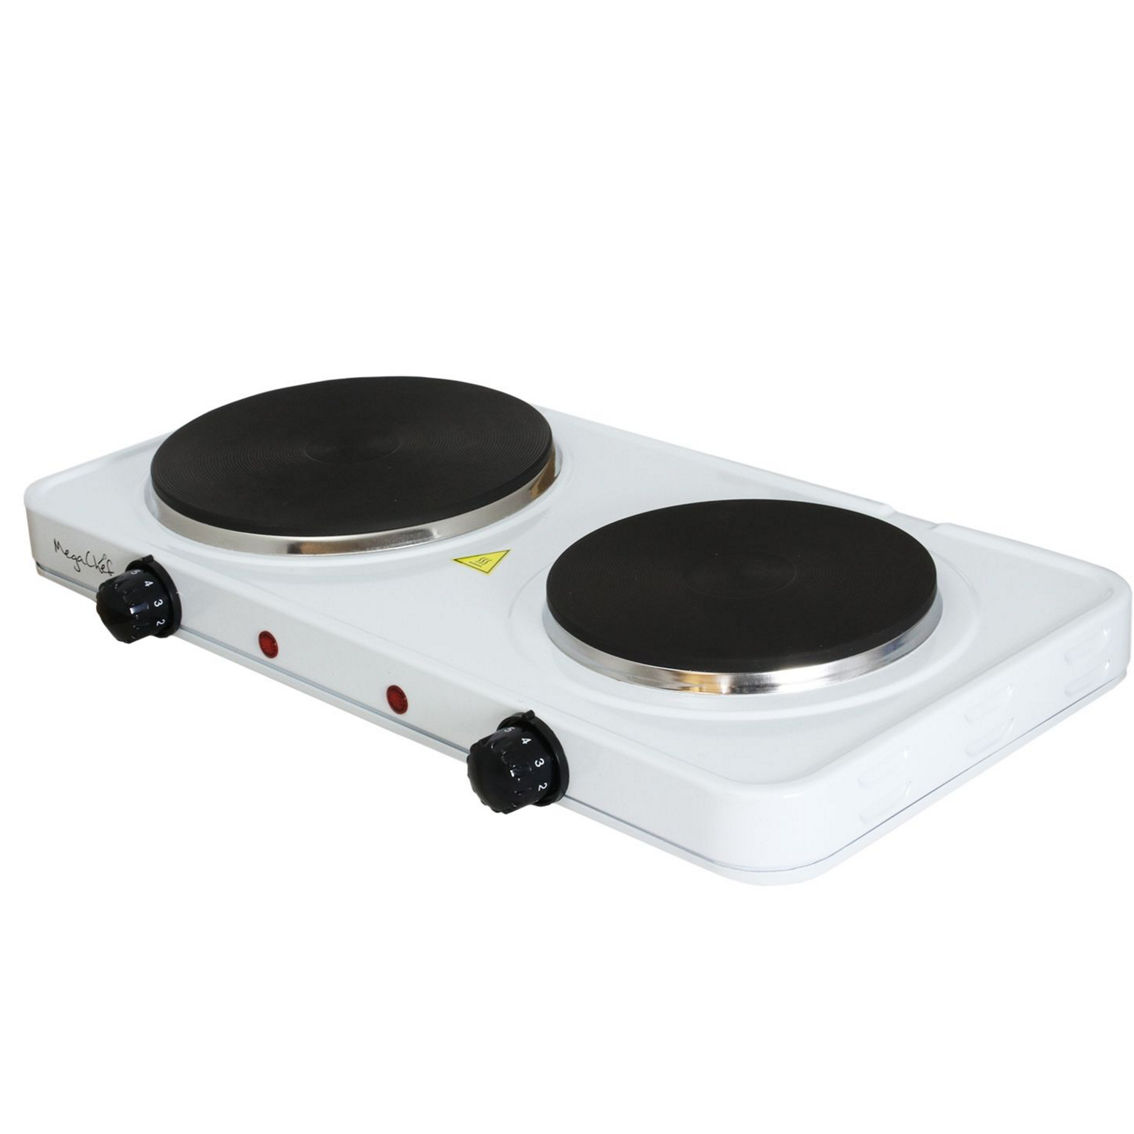  MegaChef Electric Easily Portable Ultra Lightweight Dual Coil  Burner Cooktop Buffet Range in Matte Black : Appliances